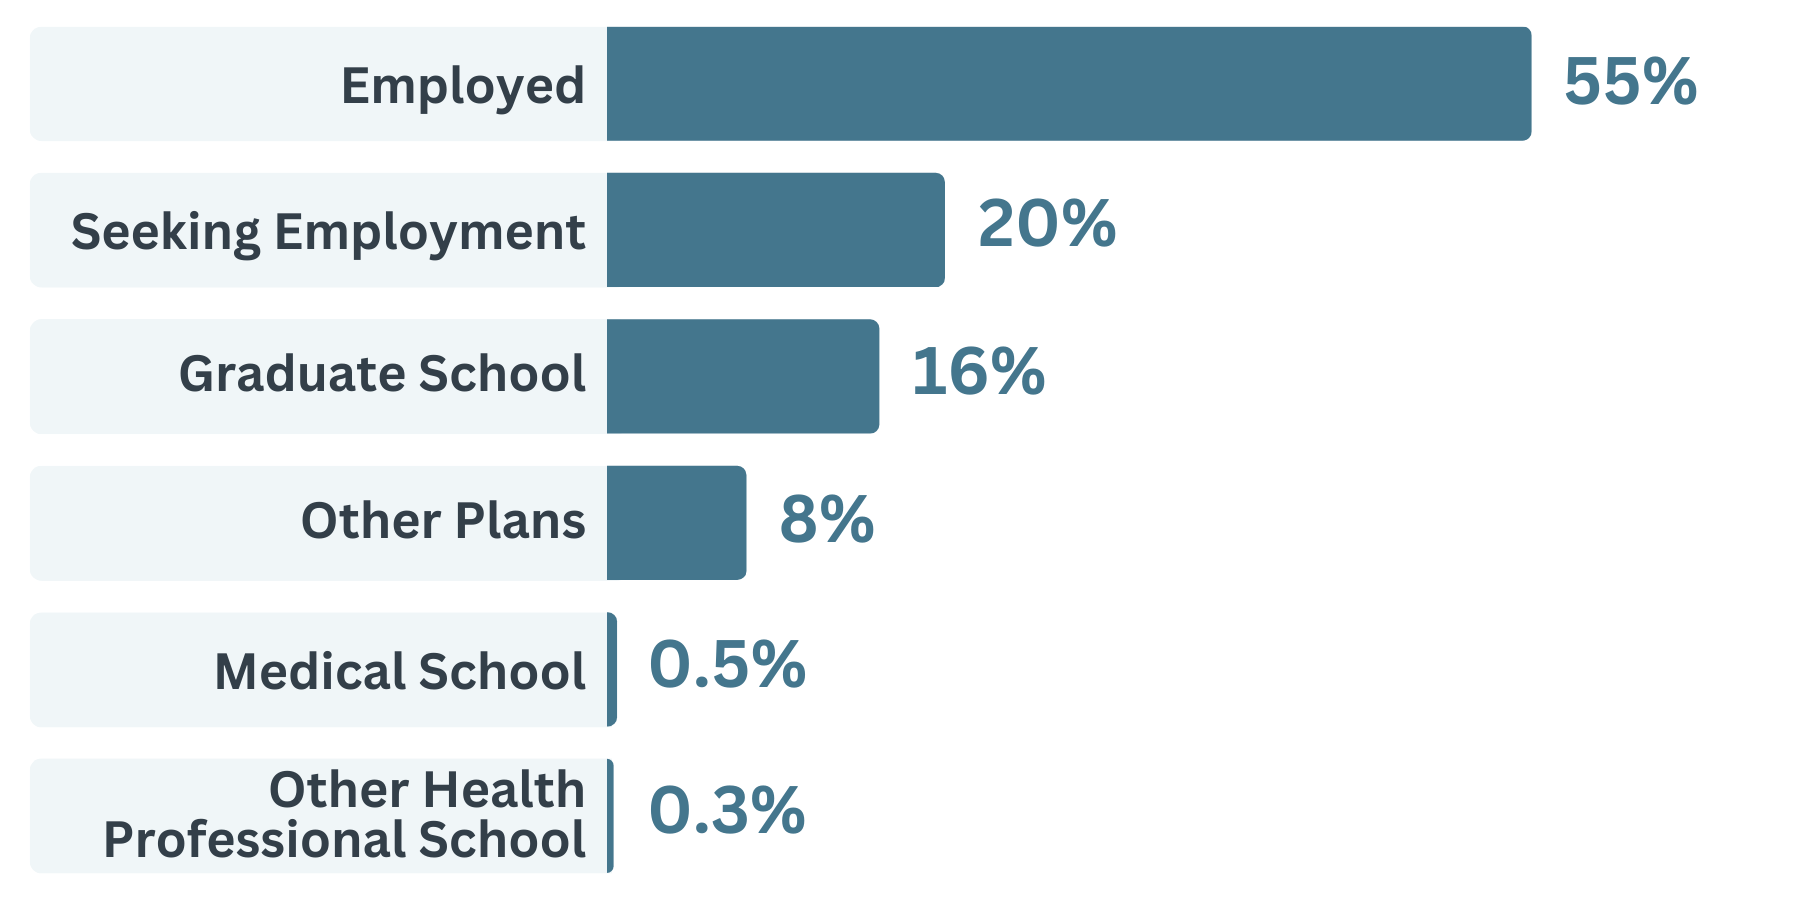 mathematics data: employed 55%, seeking employment 20%, graduate school 16%, other plans 8%, medical school 0.5%, other health professional school 0.3%